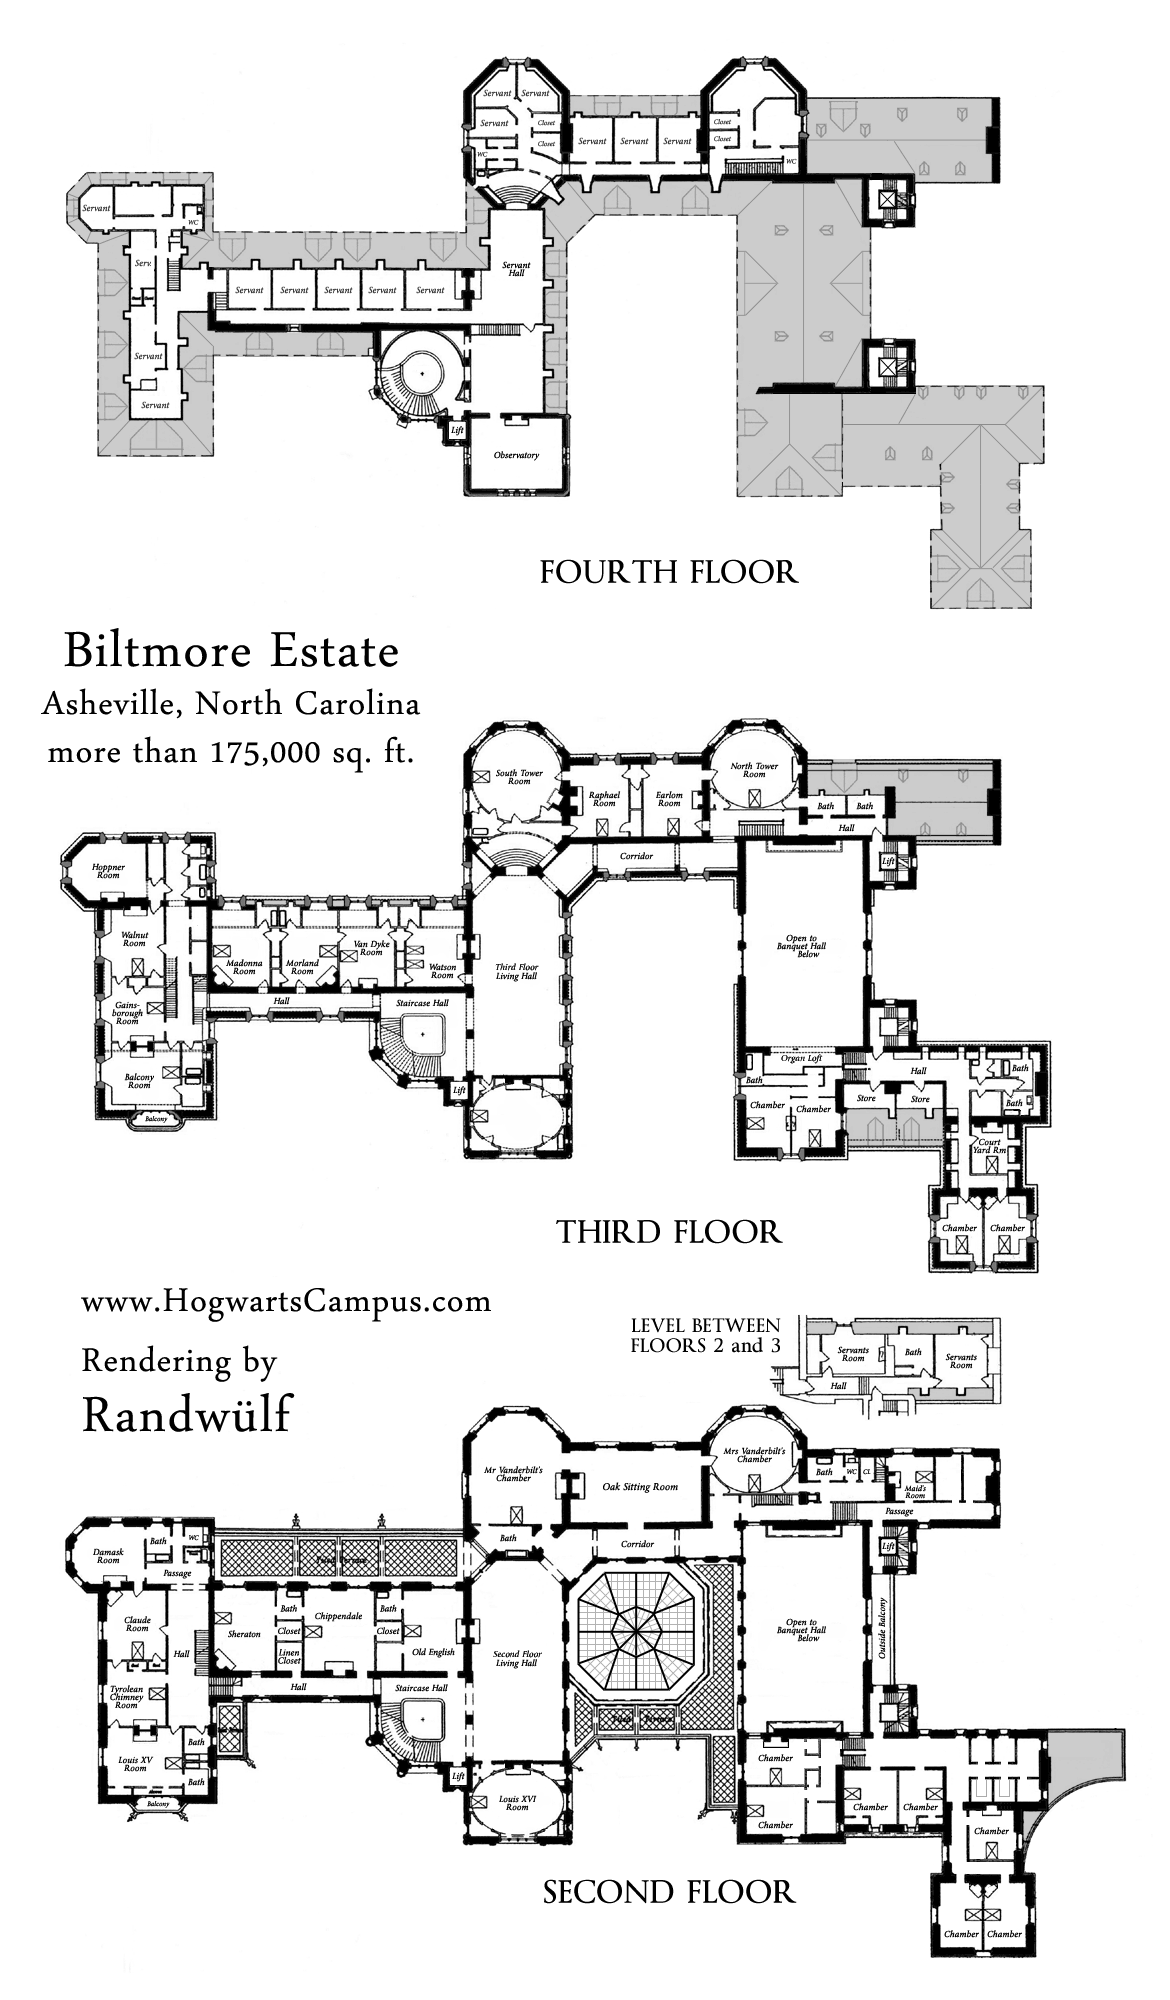 Biltmore Estate Mansion Floor Plan upper 3 floors. We